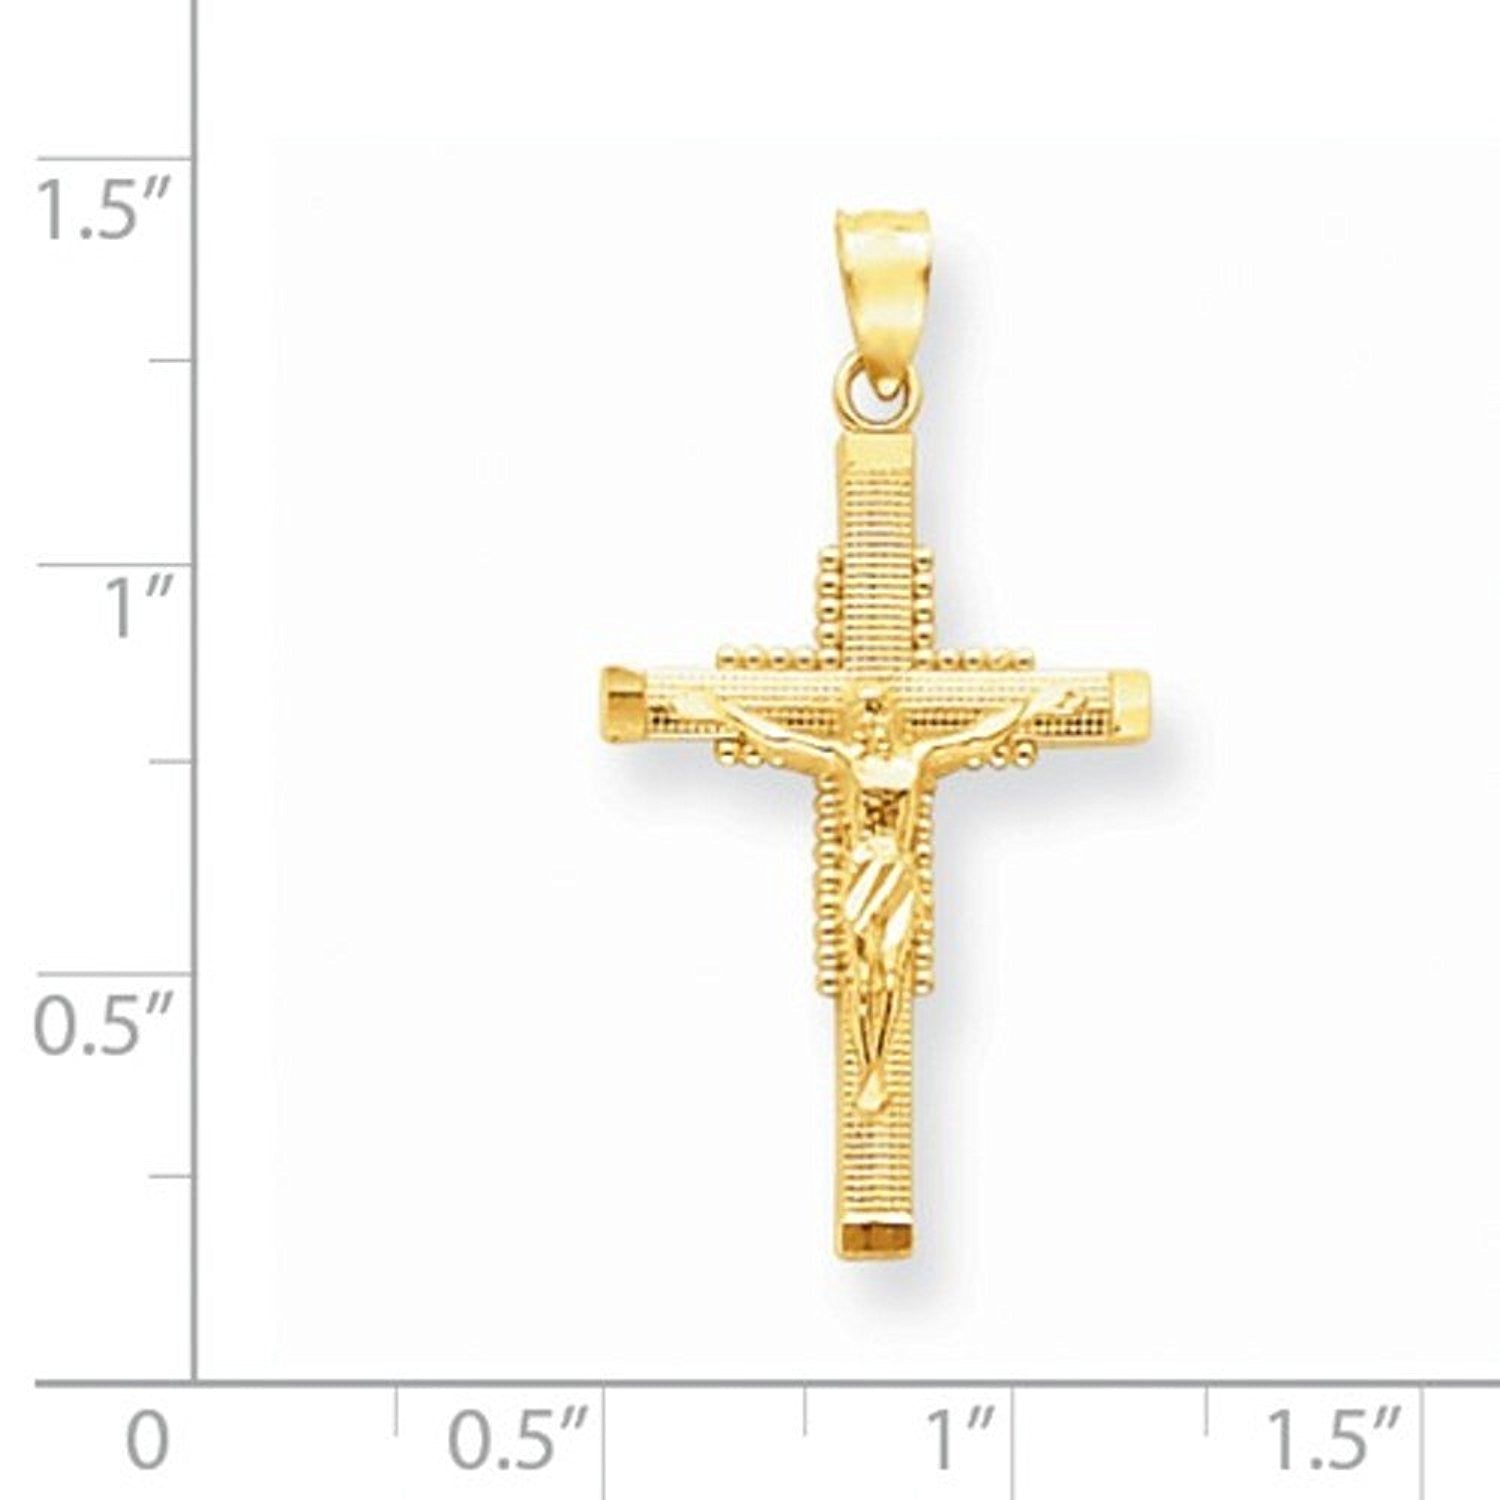 14k Yellow Gold Crucifix Cross Pendant Charm - [cklinternational]